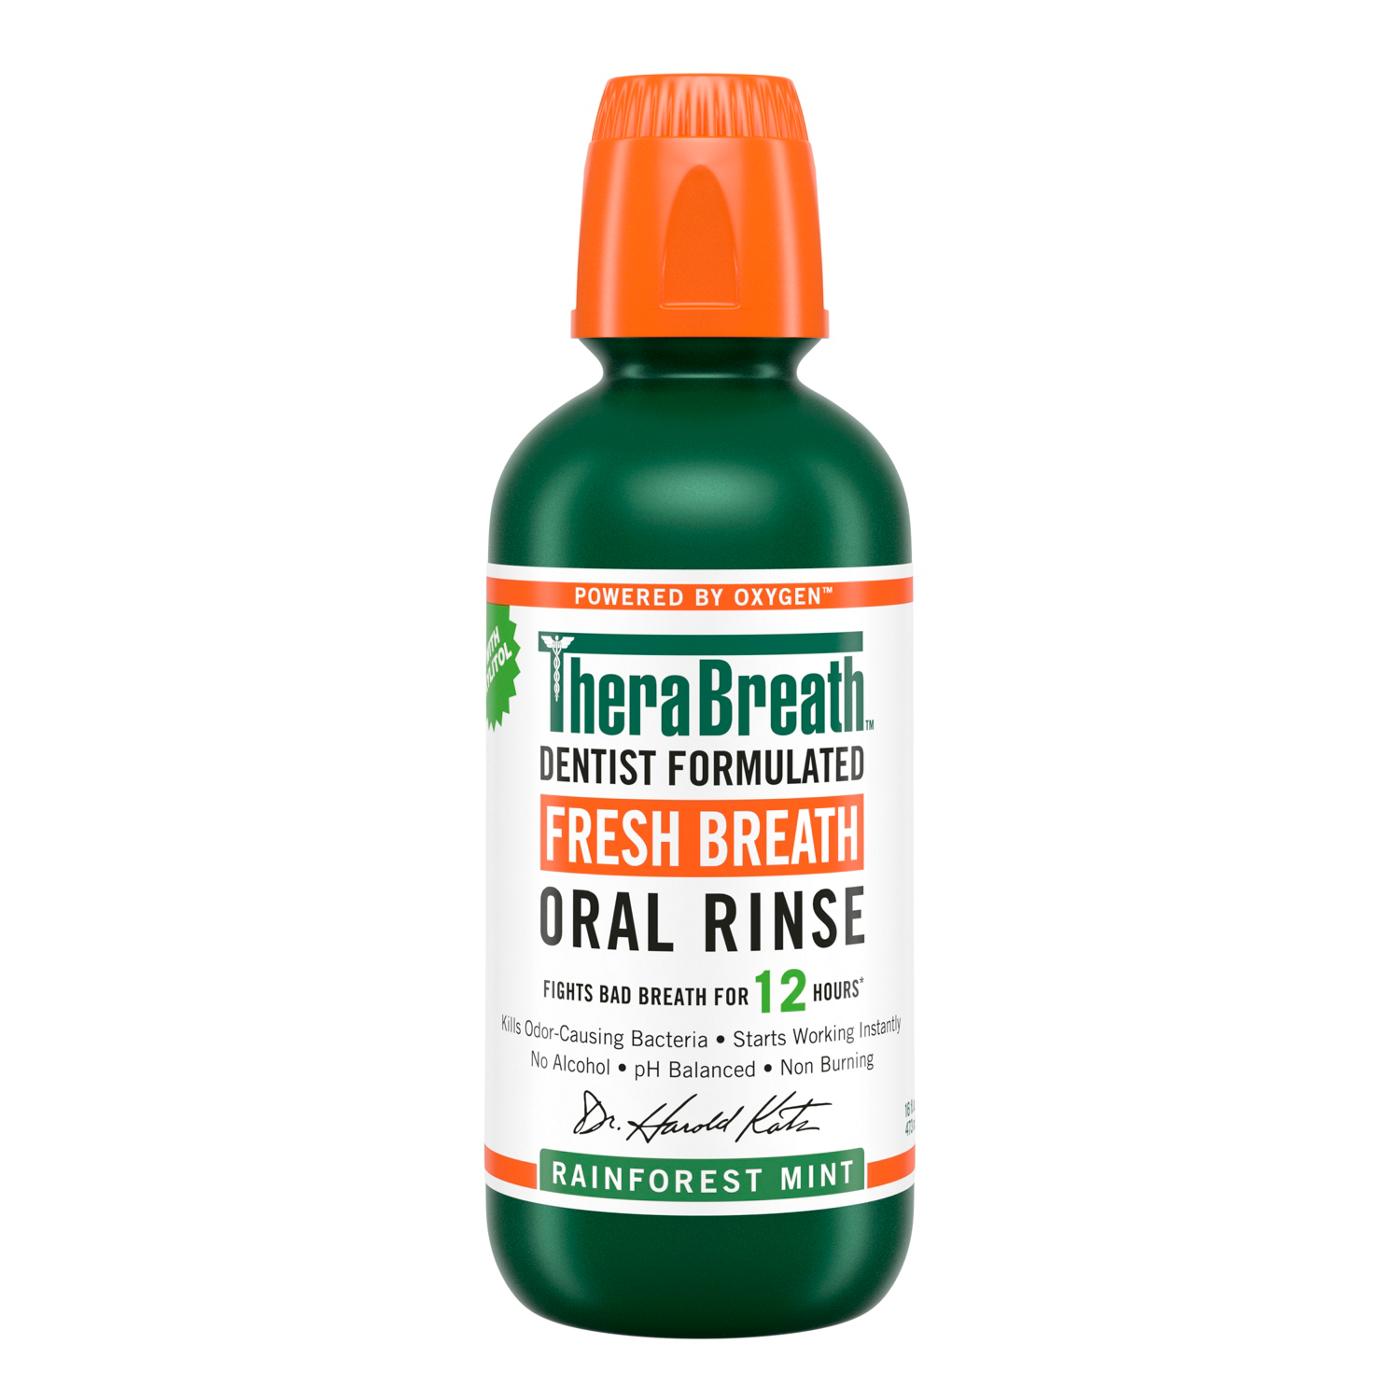 TheraBreath Fresh Breath Oral Rinse Rainforest Mint; image 1 of 6